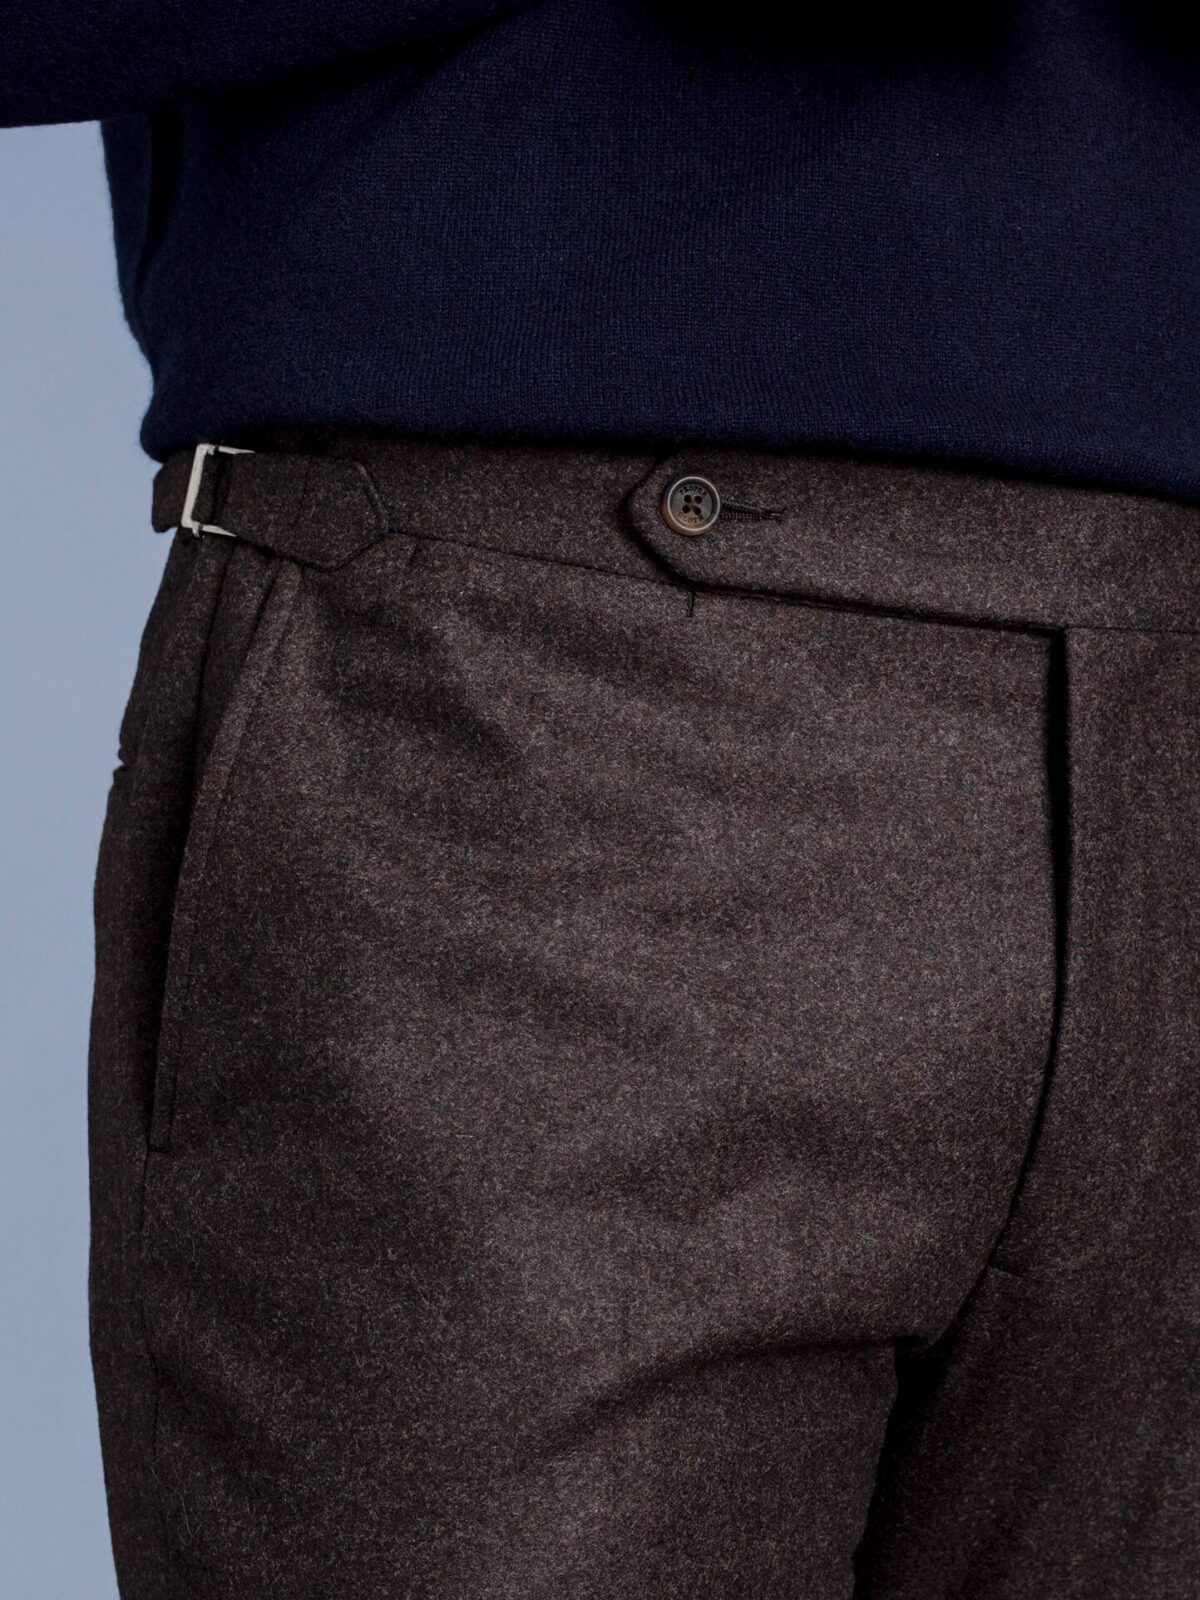 Charcoal Grey Solid Flannel Pants | He Spoke Style